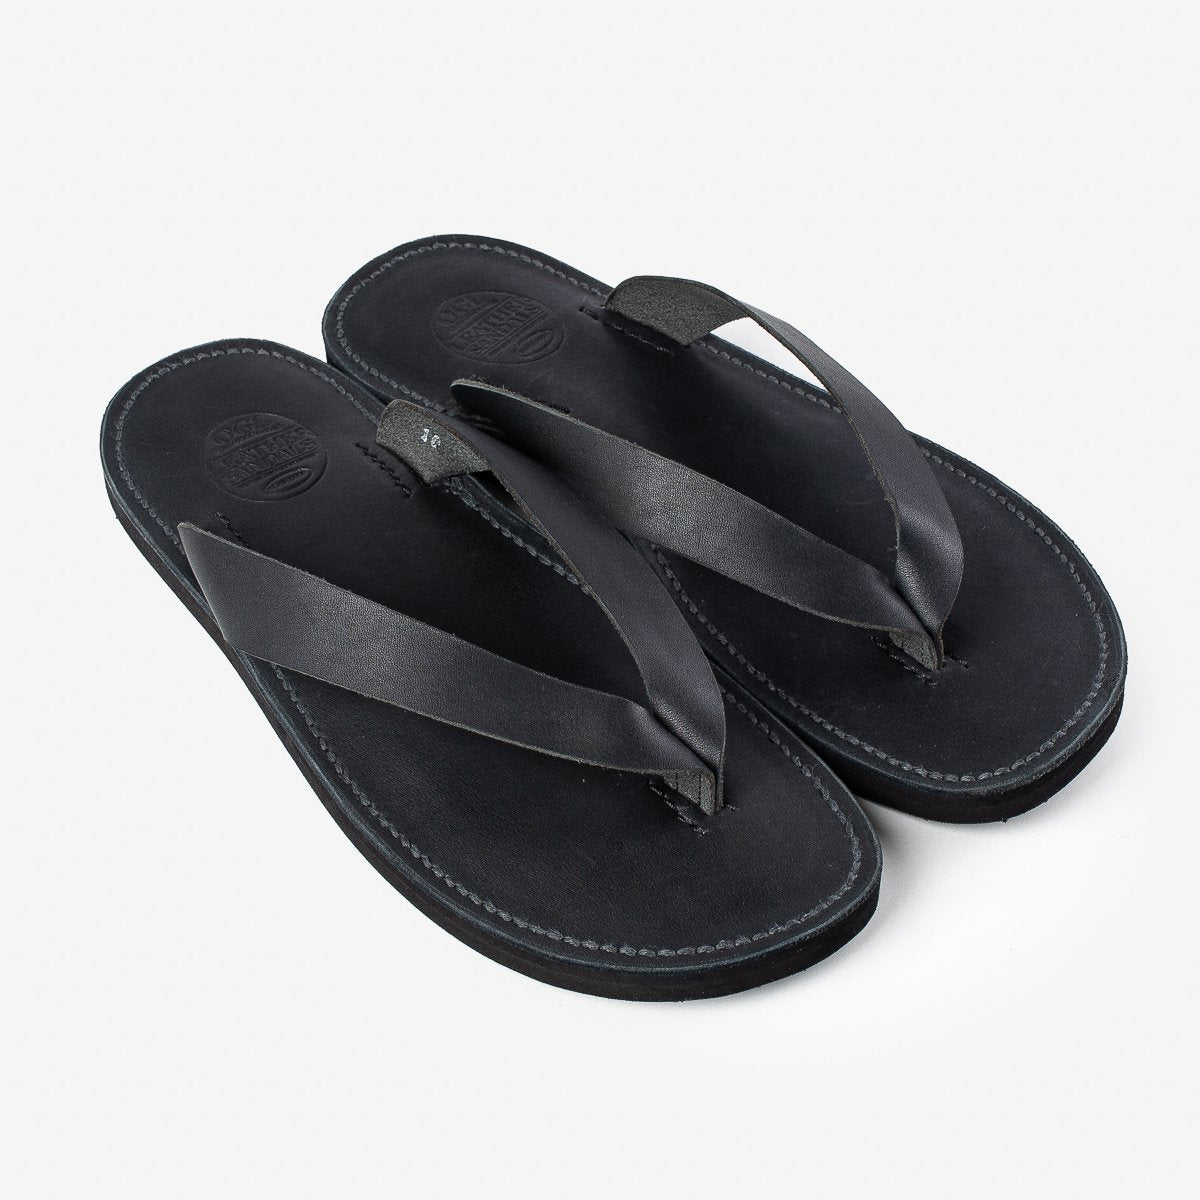 Obbi Good Label x Dr. Sole Leather Thong Sandals - Black